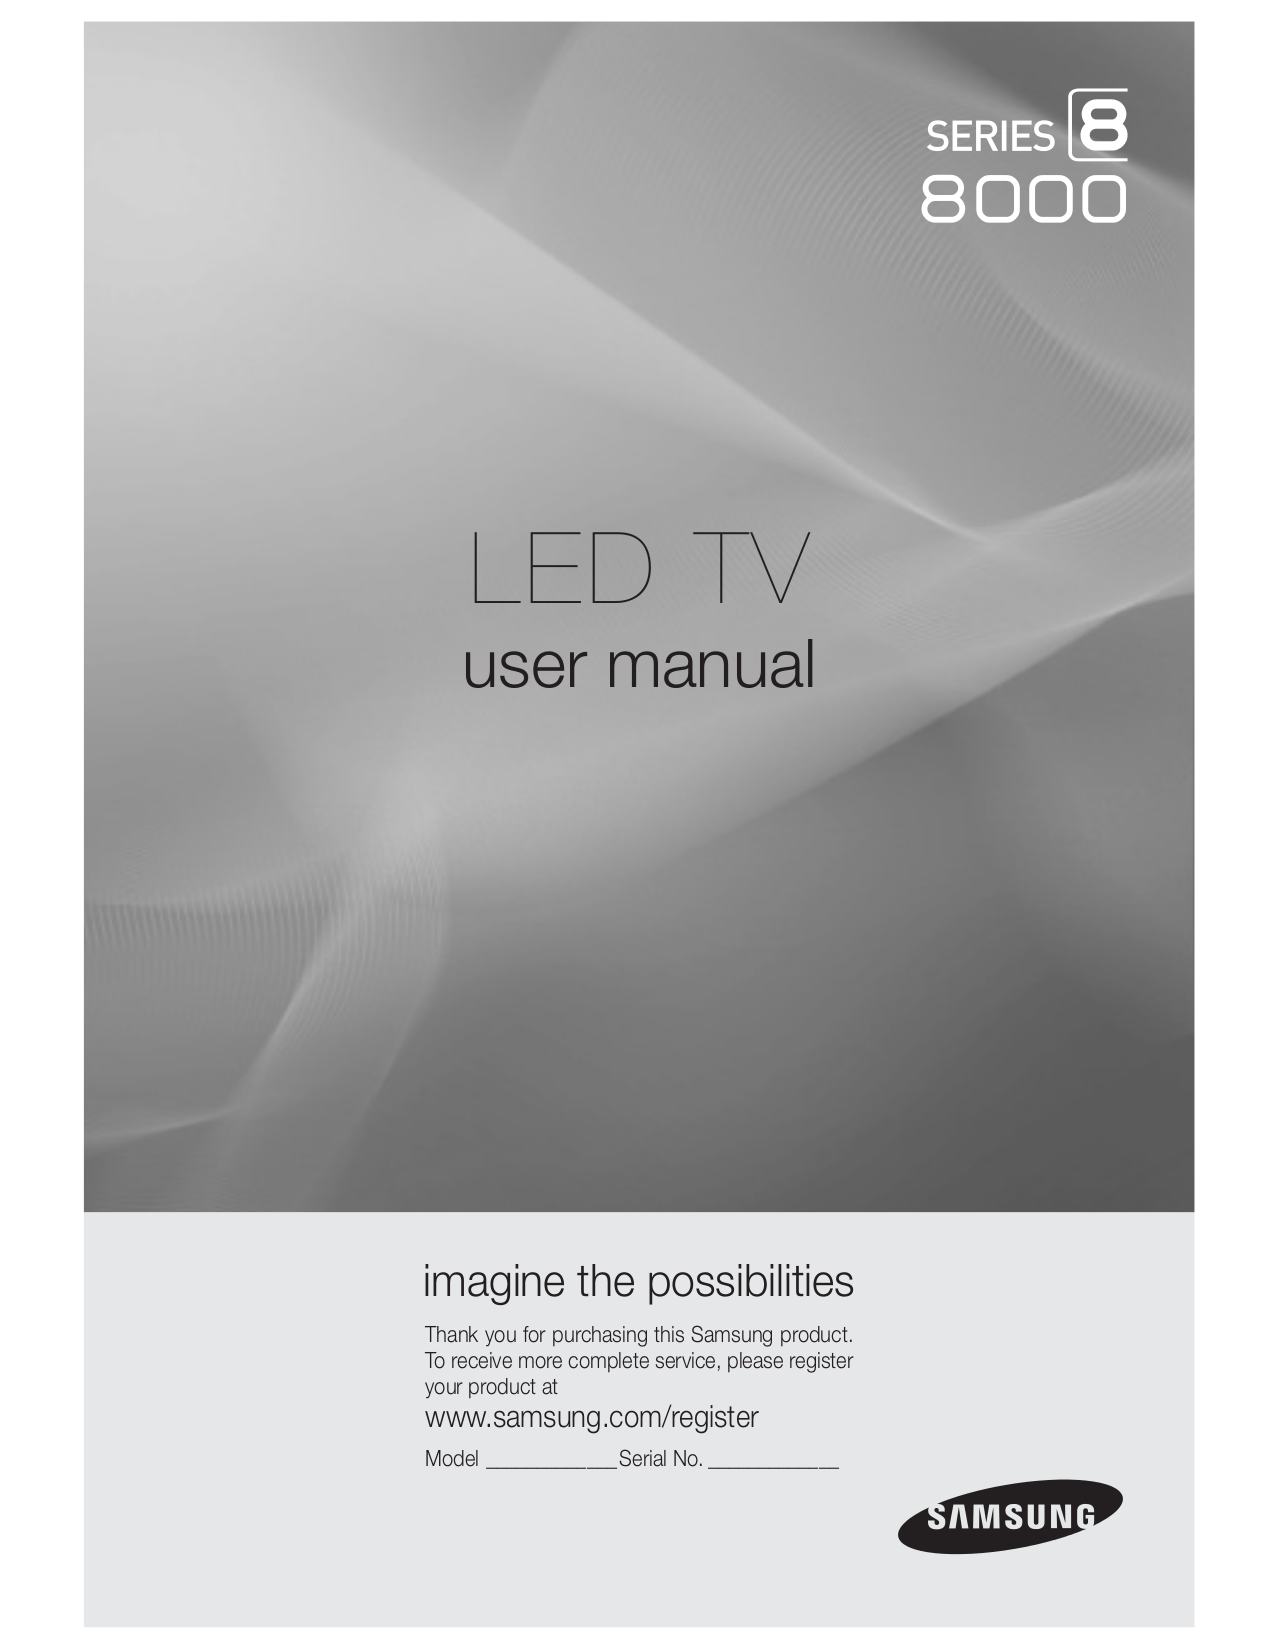 Samsung Series 6 6100 Led Tv User Manual | Smart TV Reviews